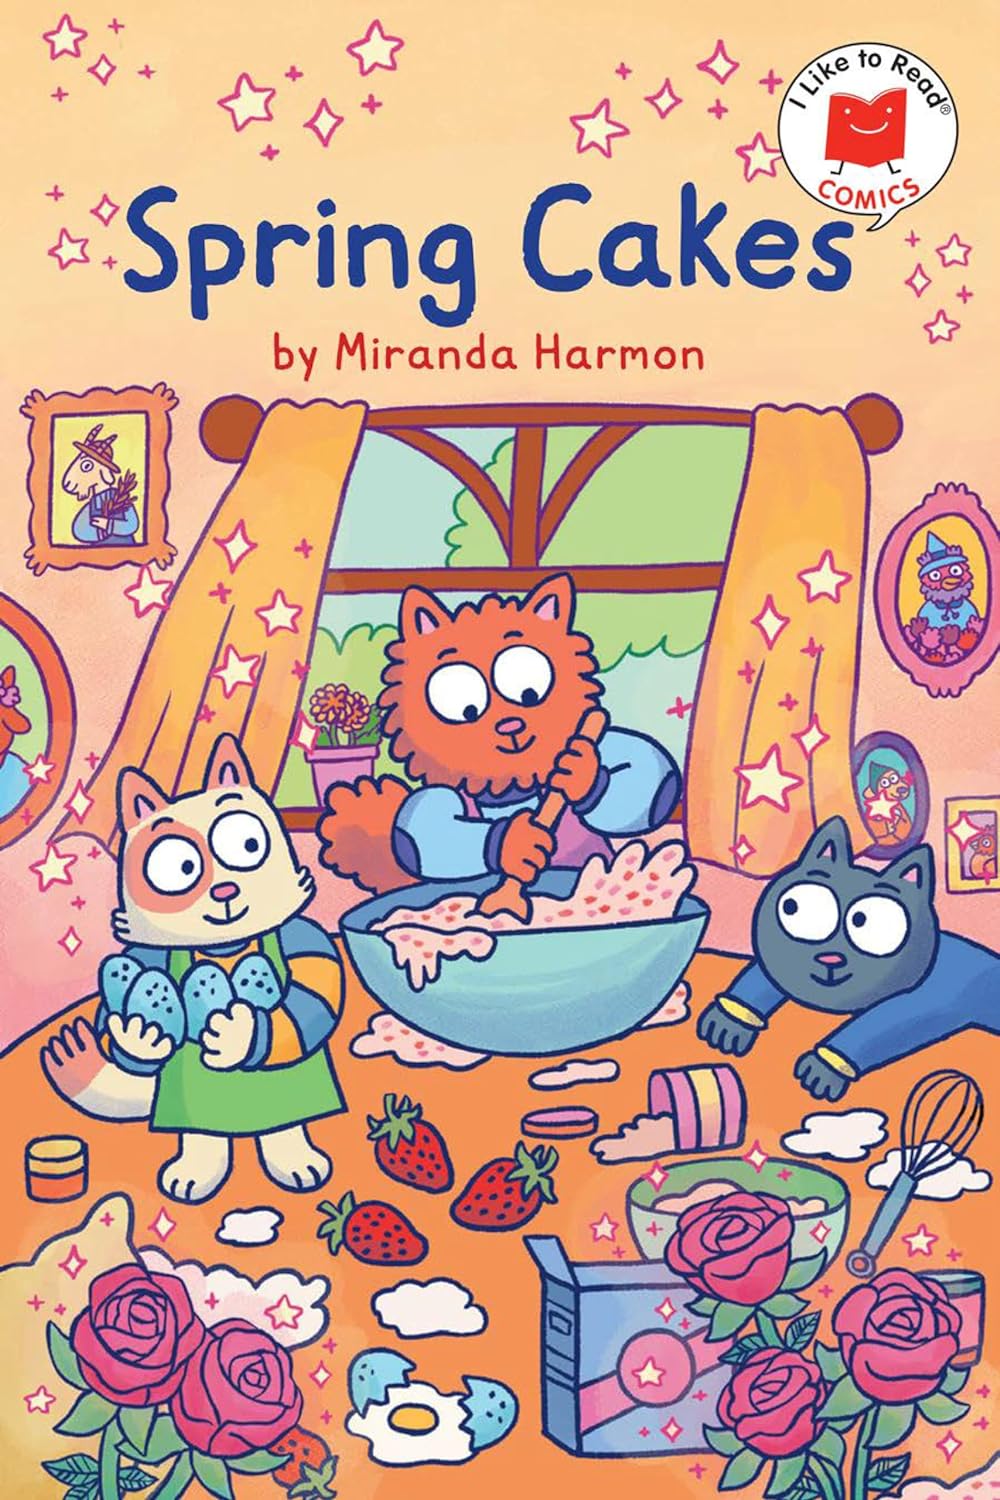 Spring Cakes (I Like to Read Comics)